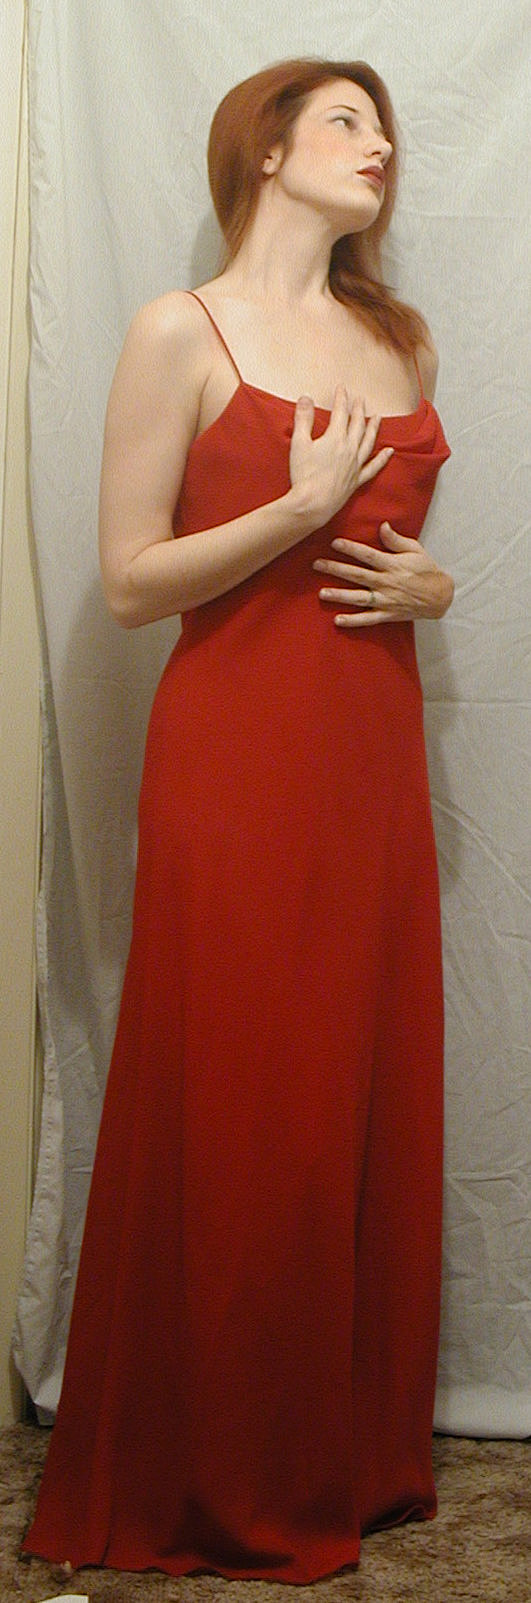 Red Dress 07 by lock...